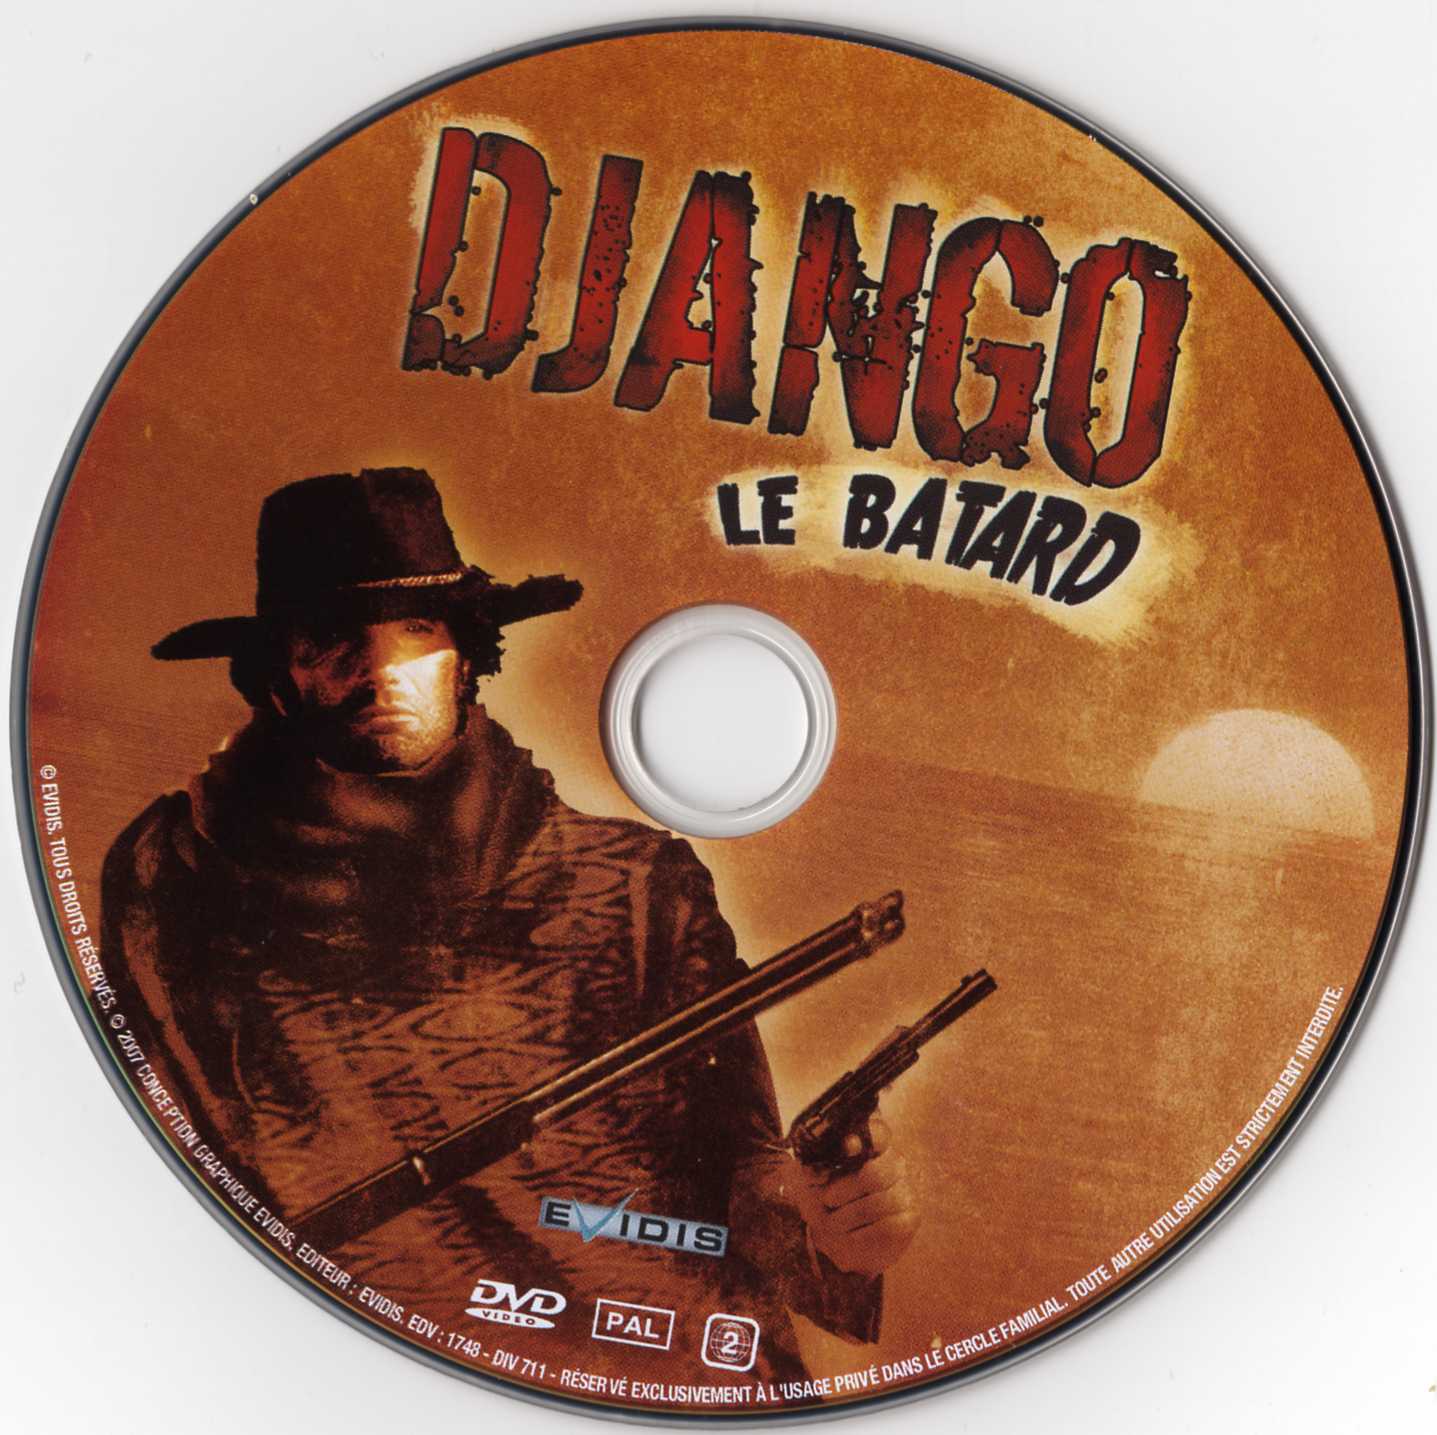 Django le batard